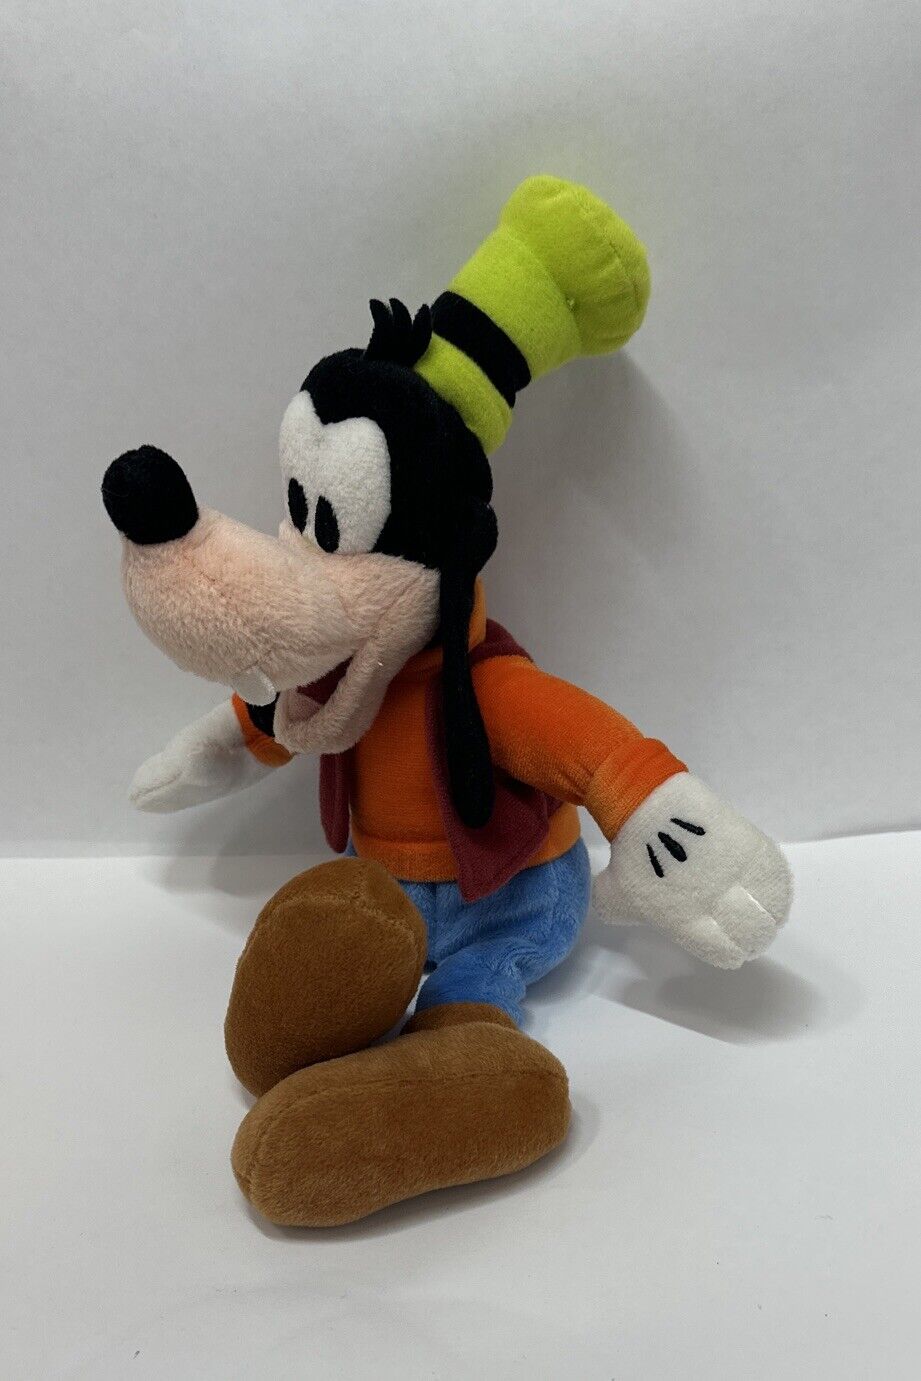 Disney - Disney Store - Goofy - Genuine Authentic - 11” Plush Stuffed Animal